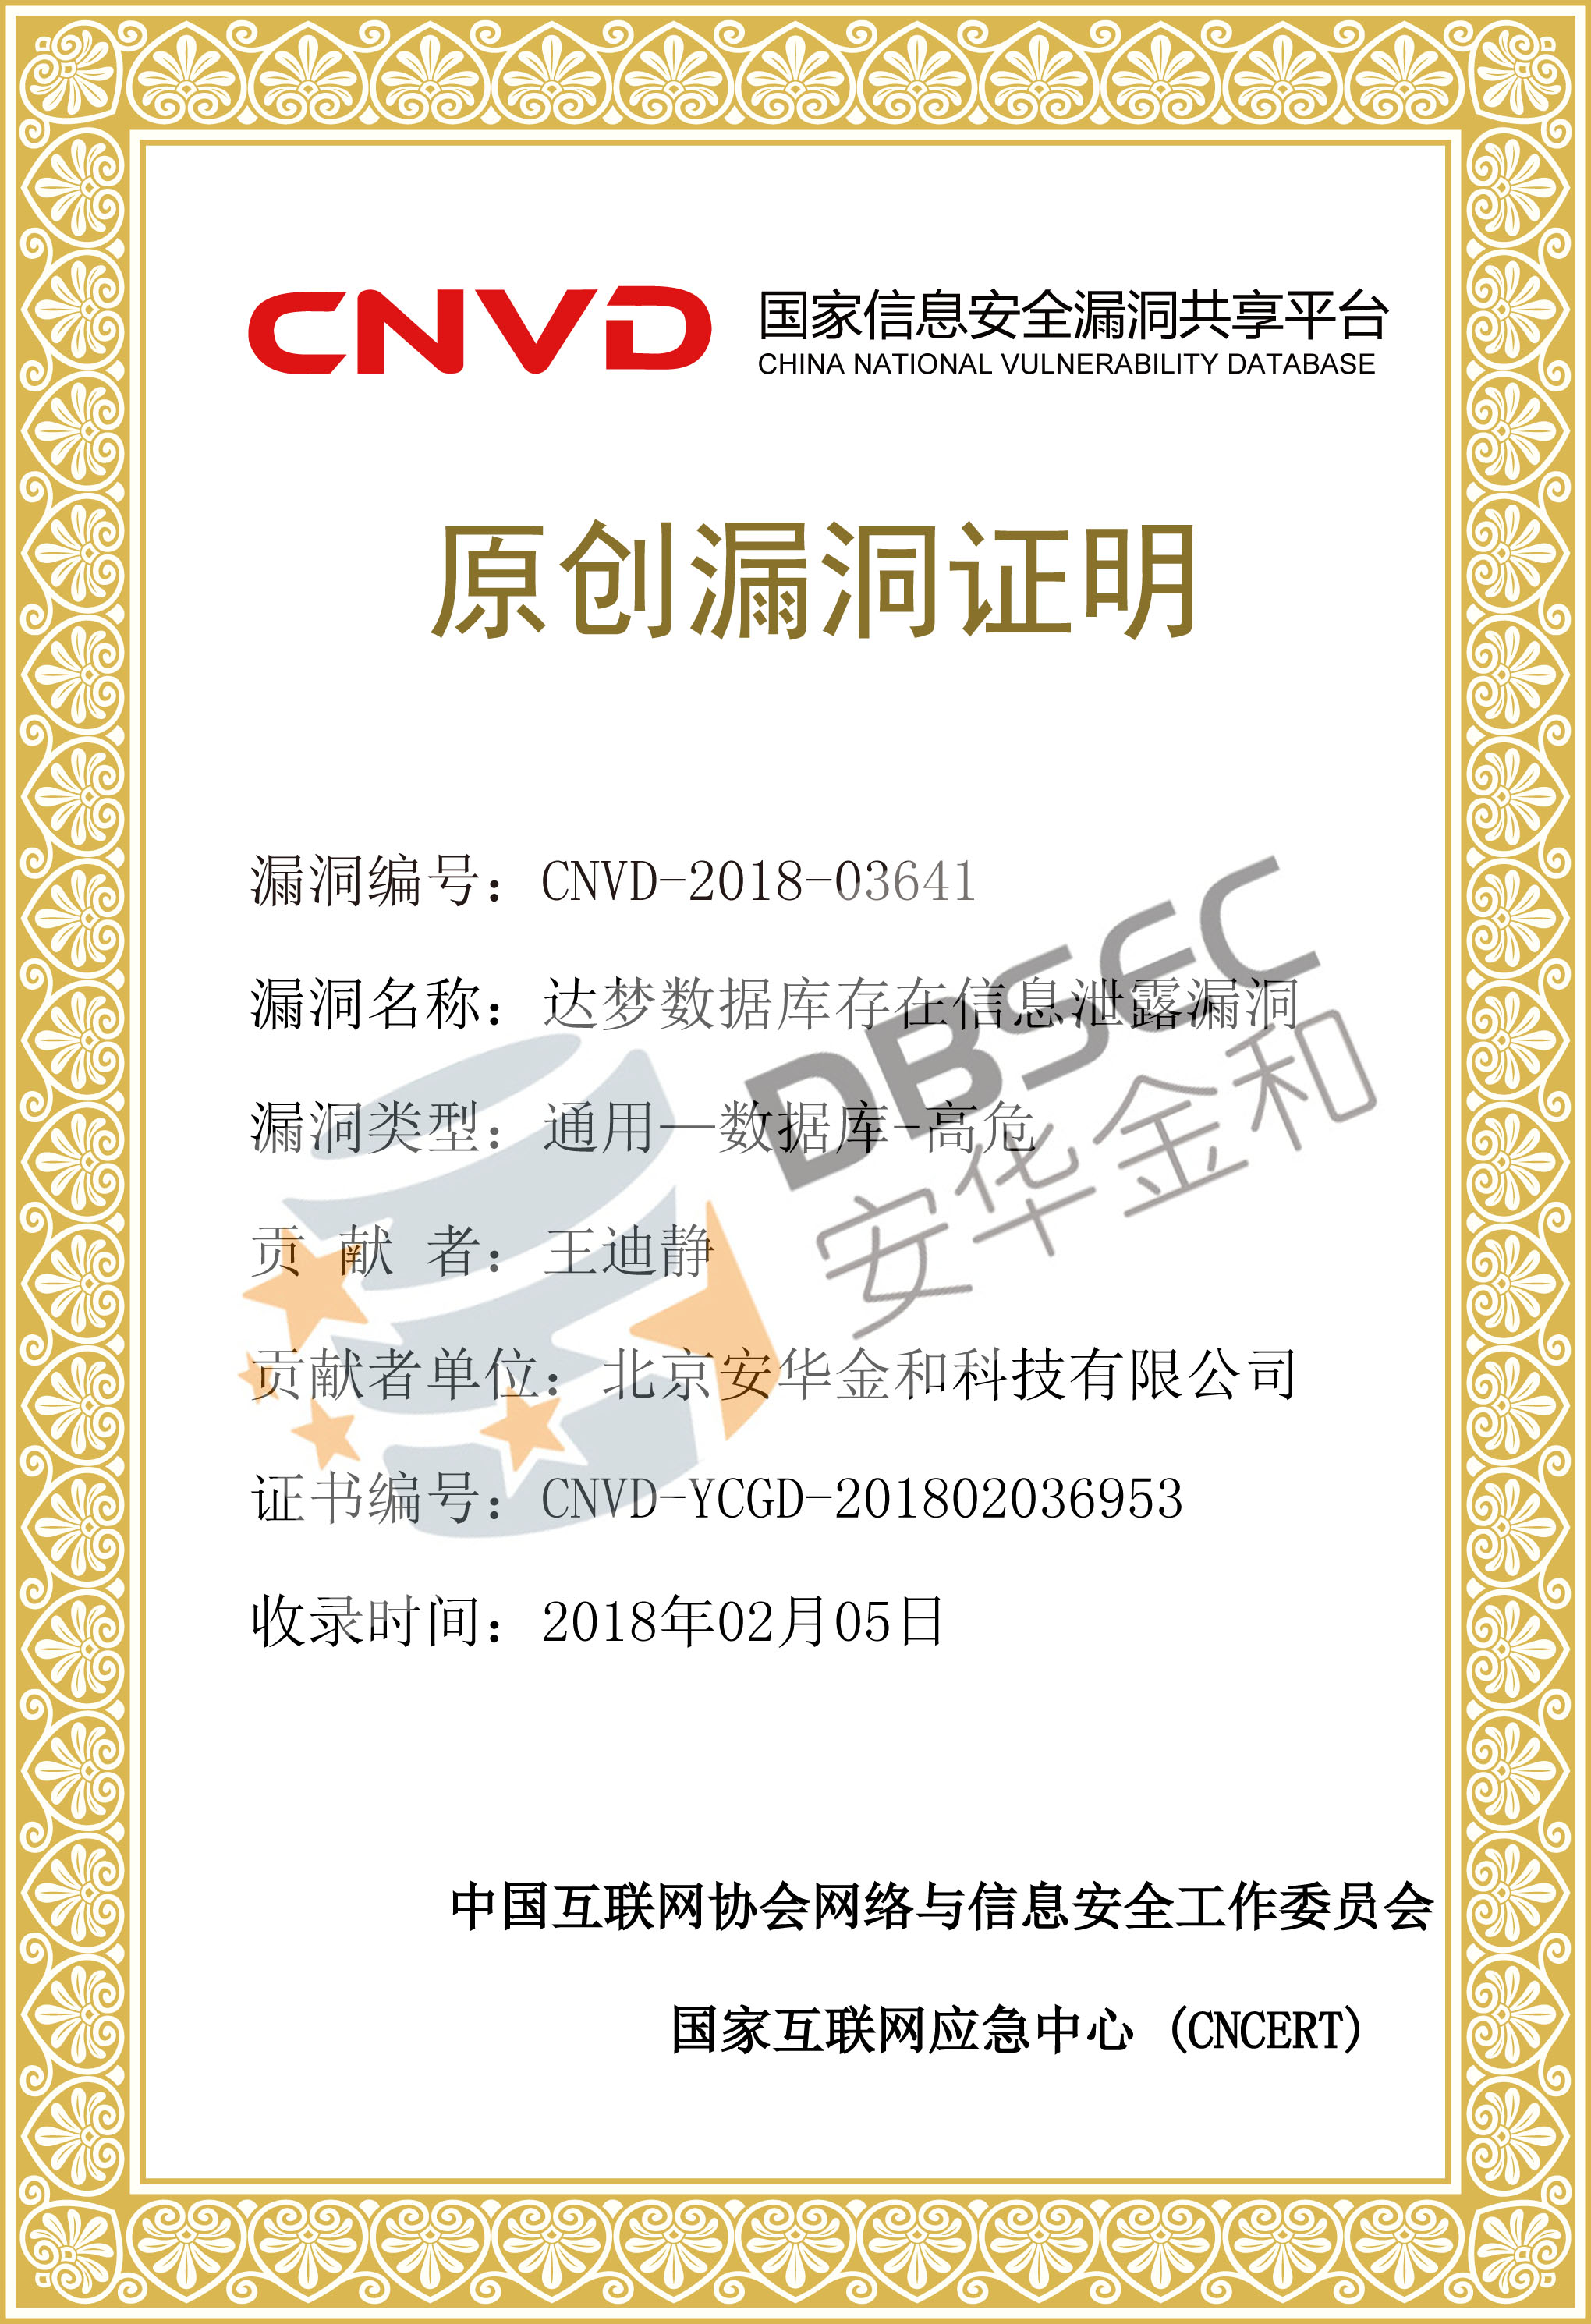 CNVD-YCGD-201802036953